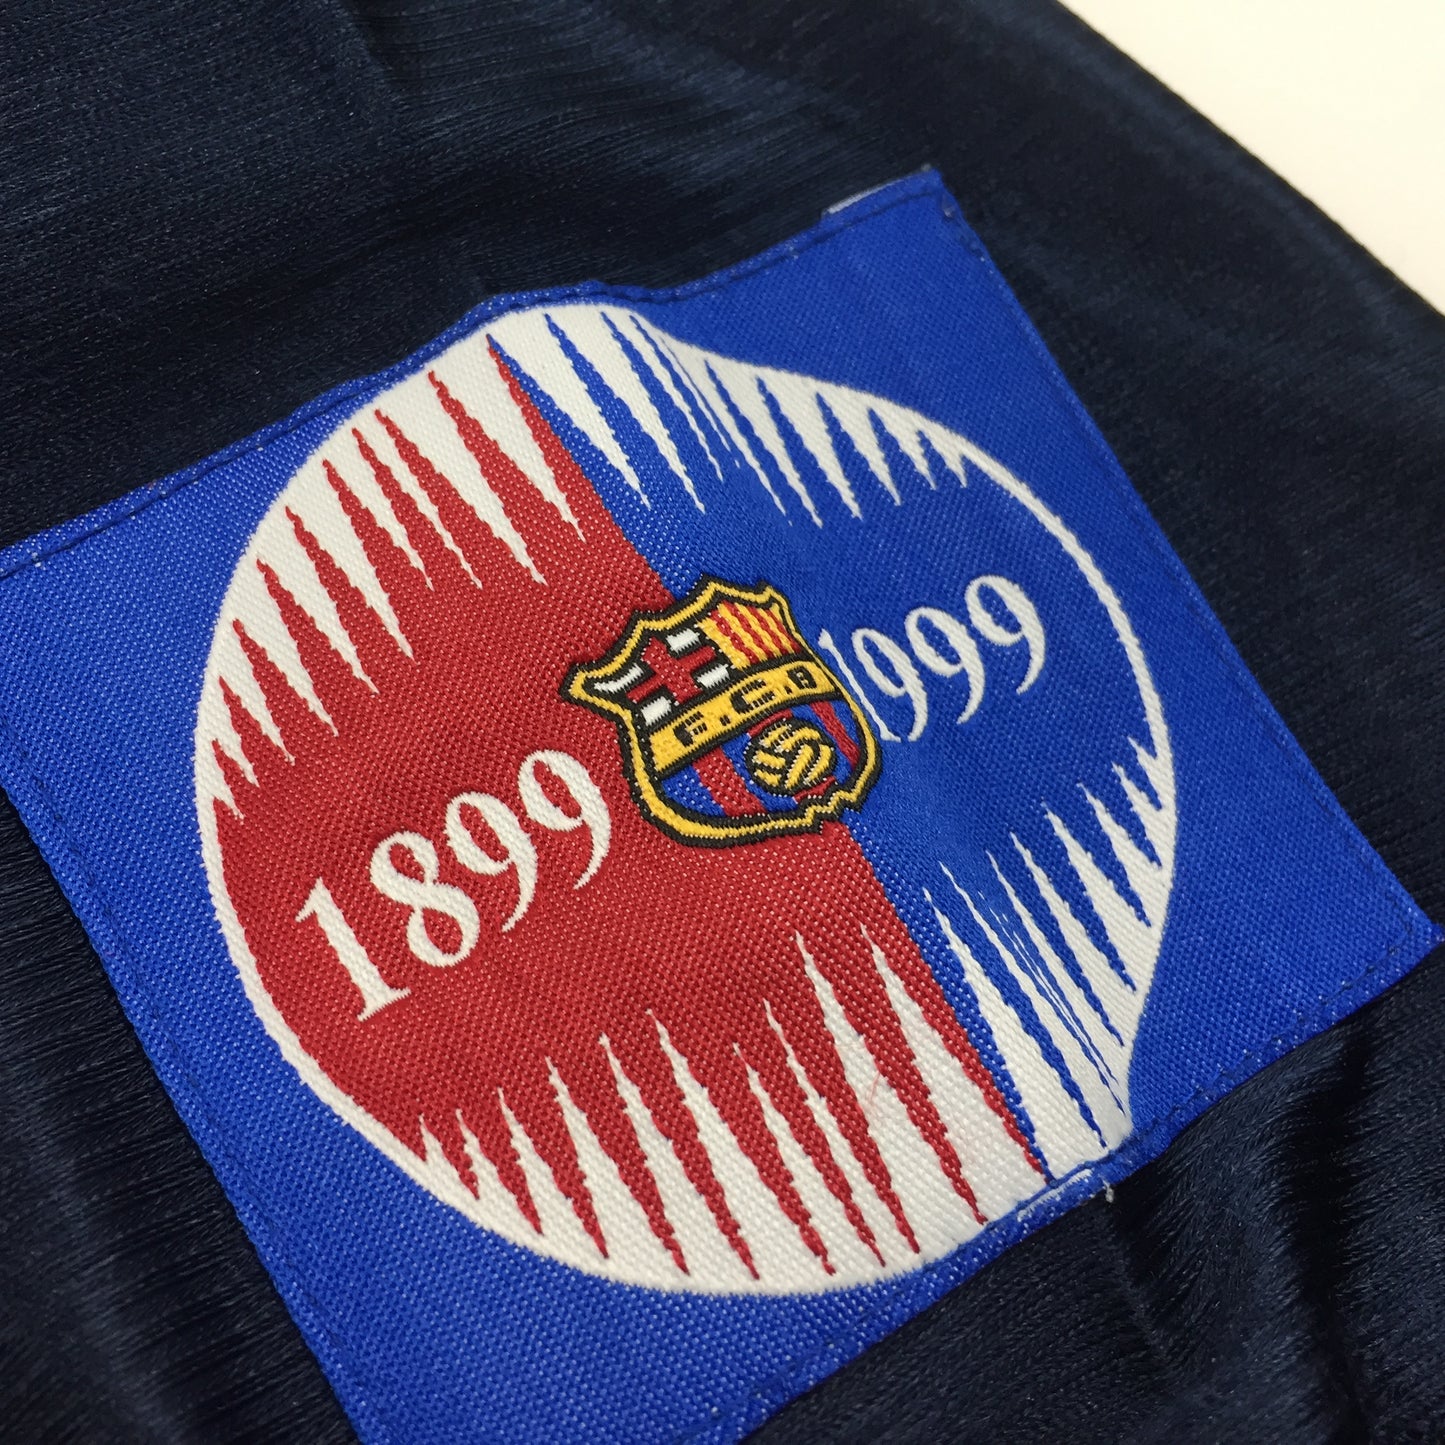 0541 Nike Vintage Bootleg FC Barcelona 98/99 Jersey